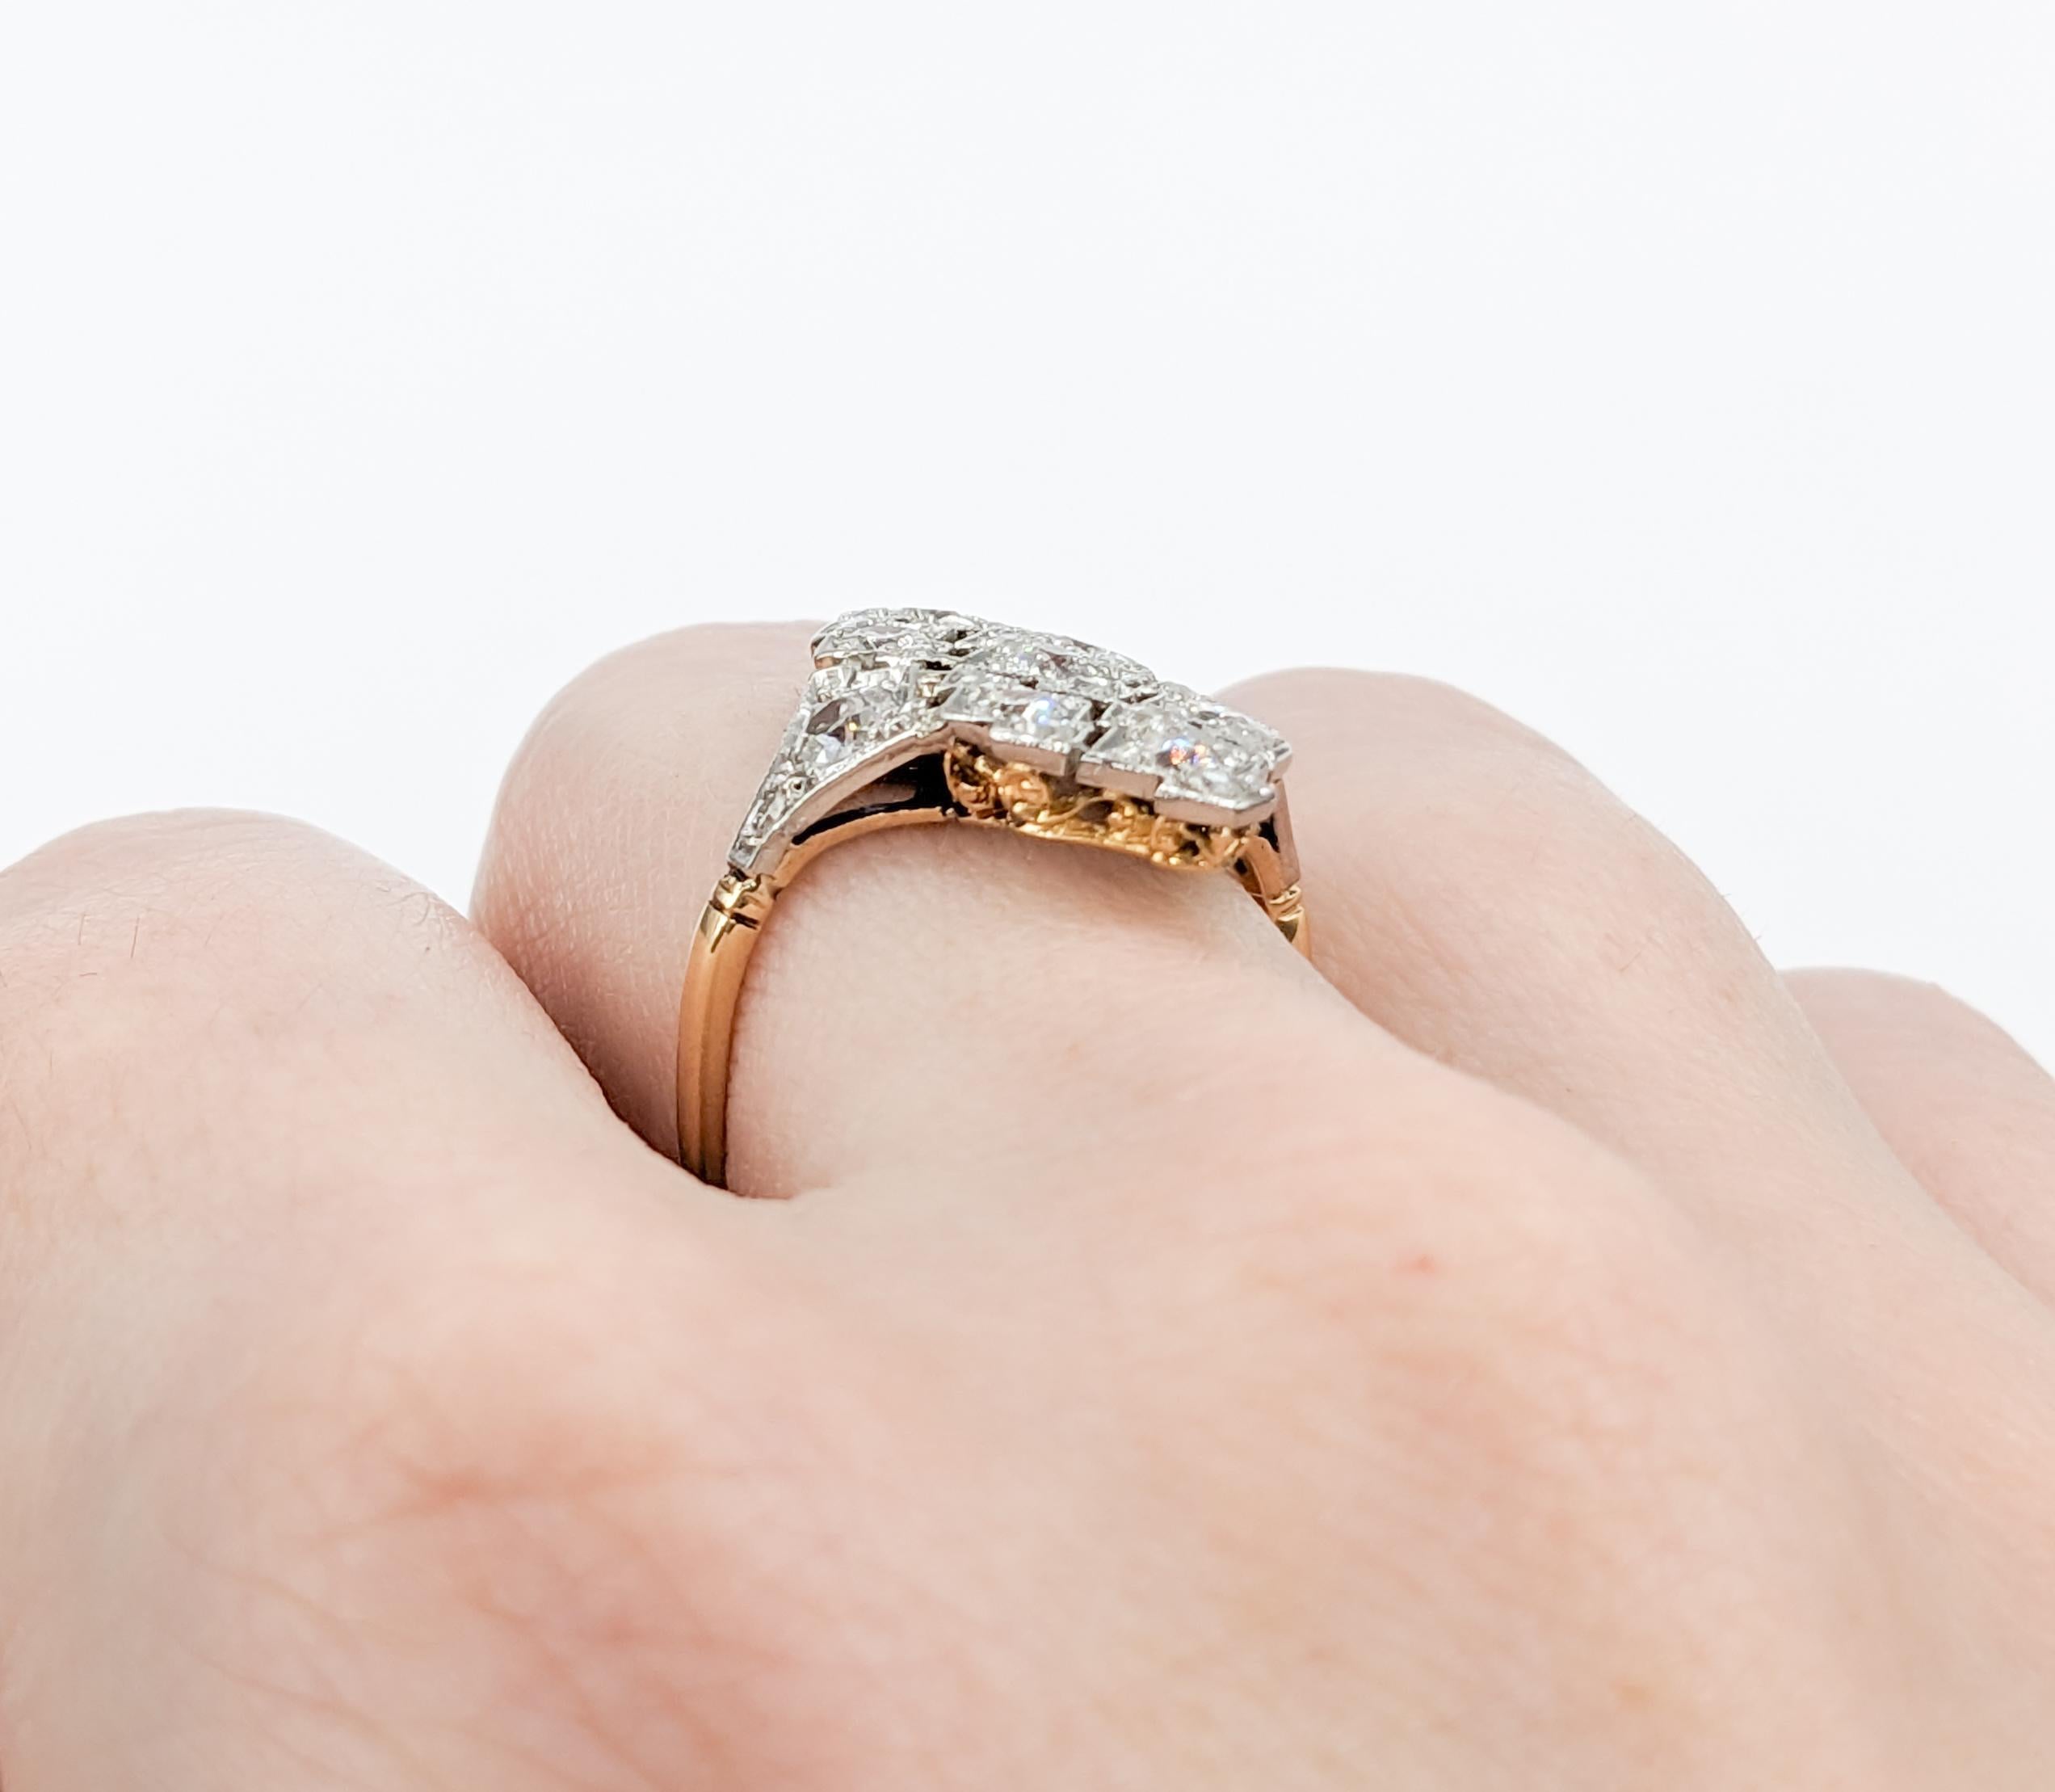 Women's Art Deco Mine Cut Diamond Ring 18kt Two-Tone Gold